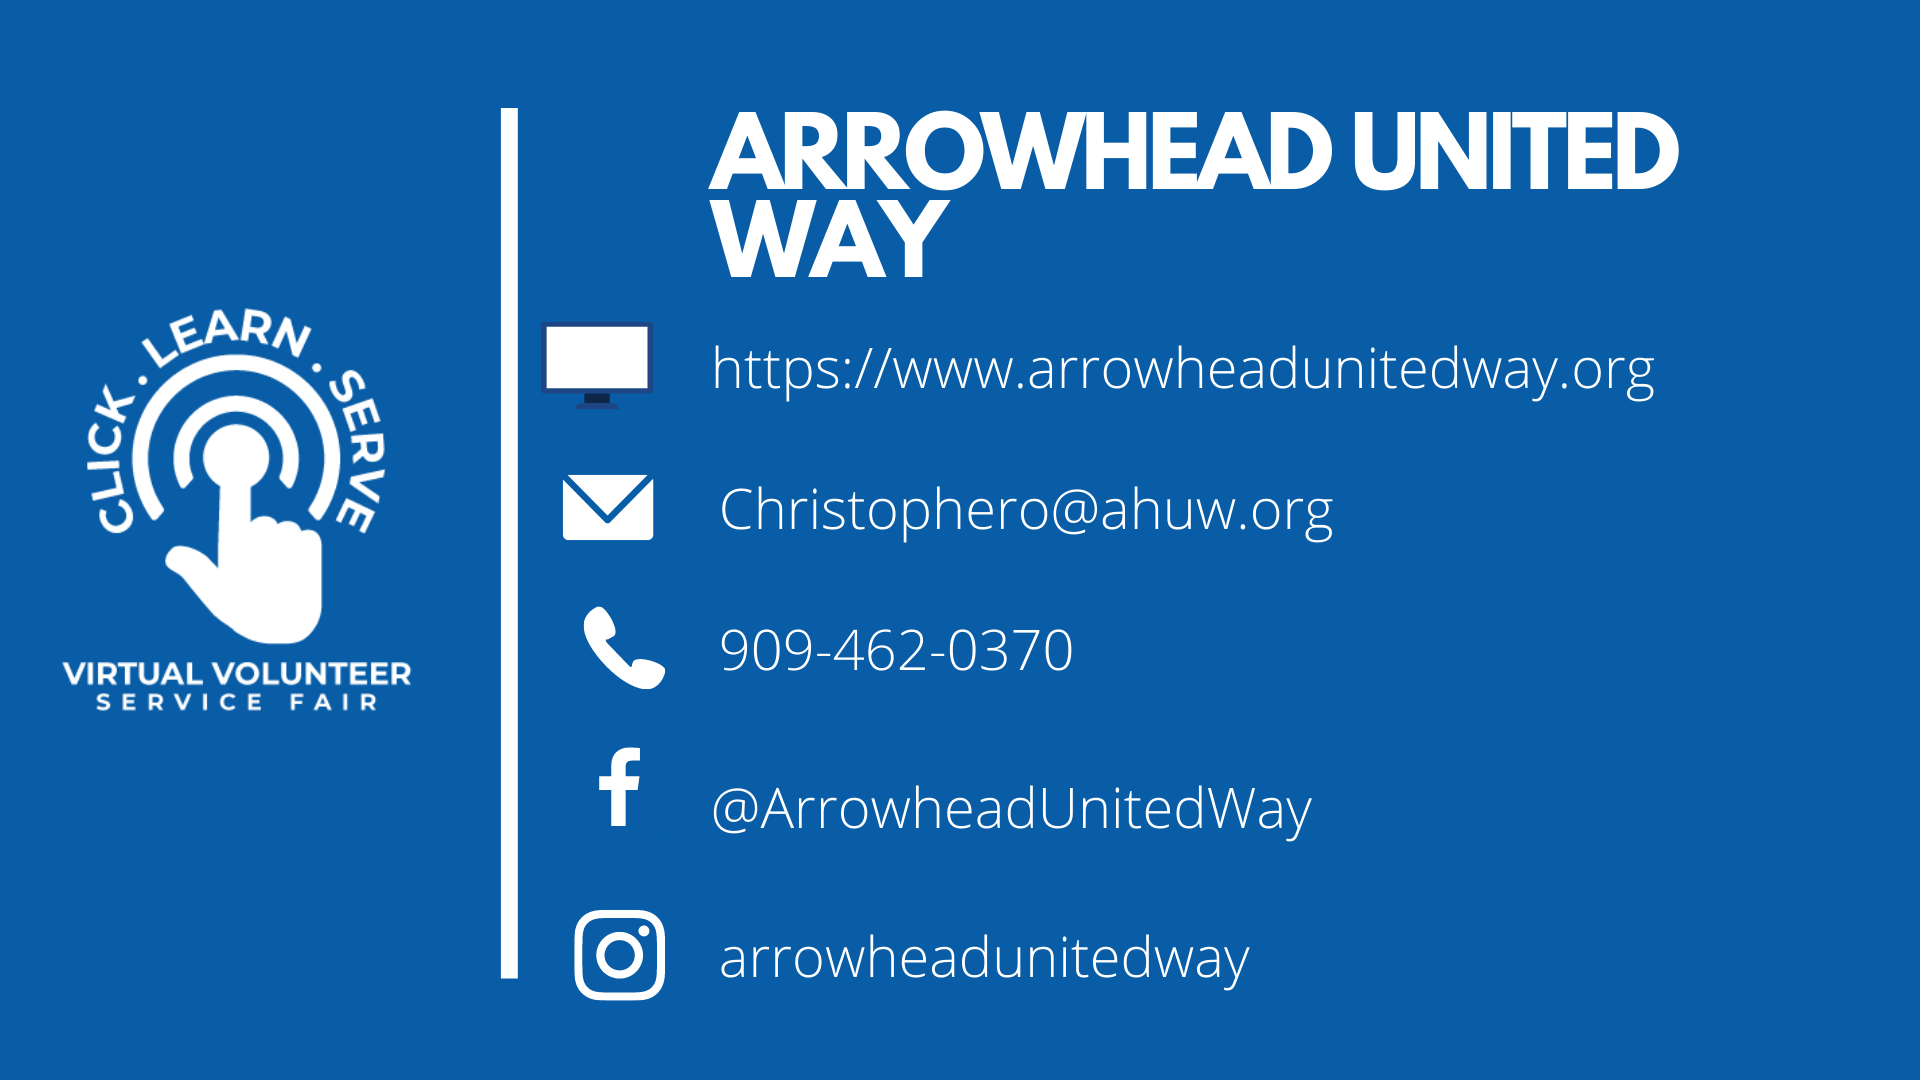 Arrowhead United Way video for Virtual Volunteer Service Fair.